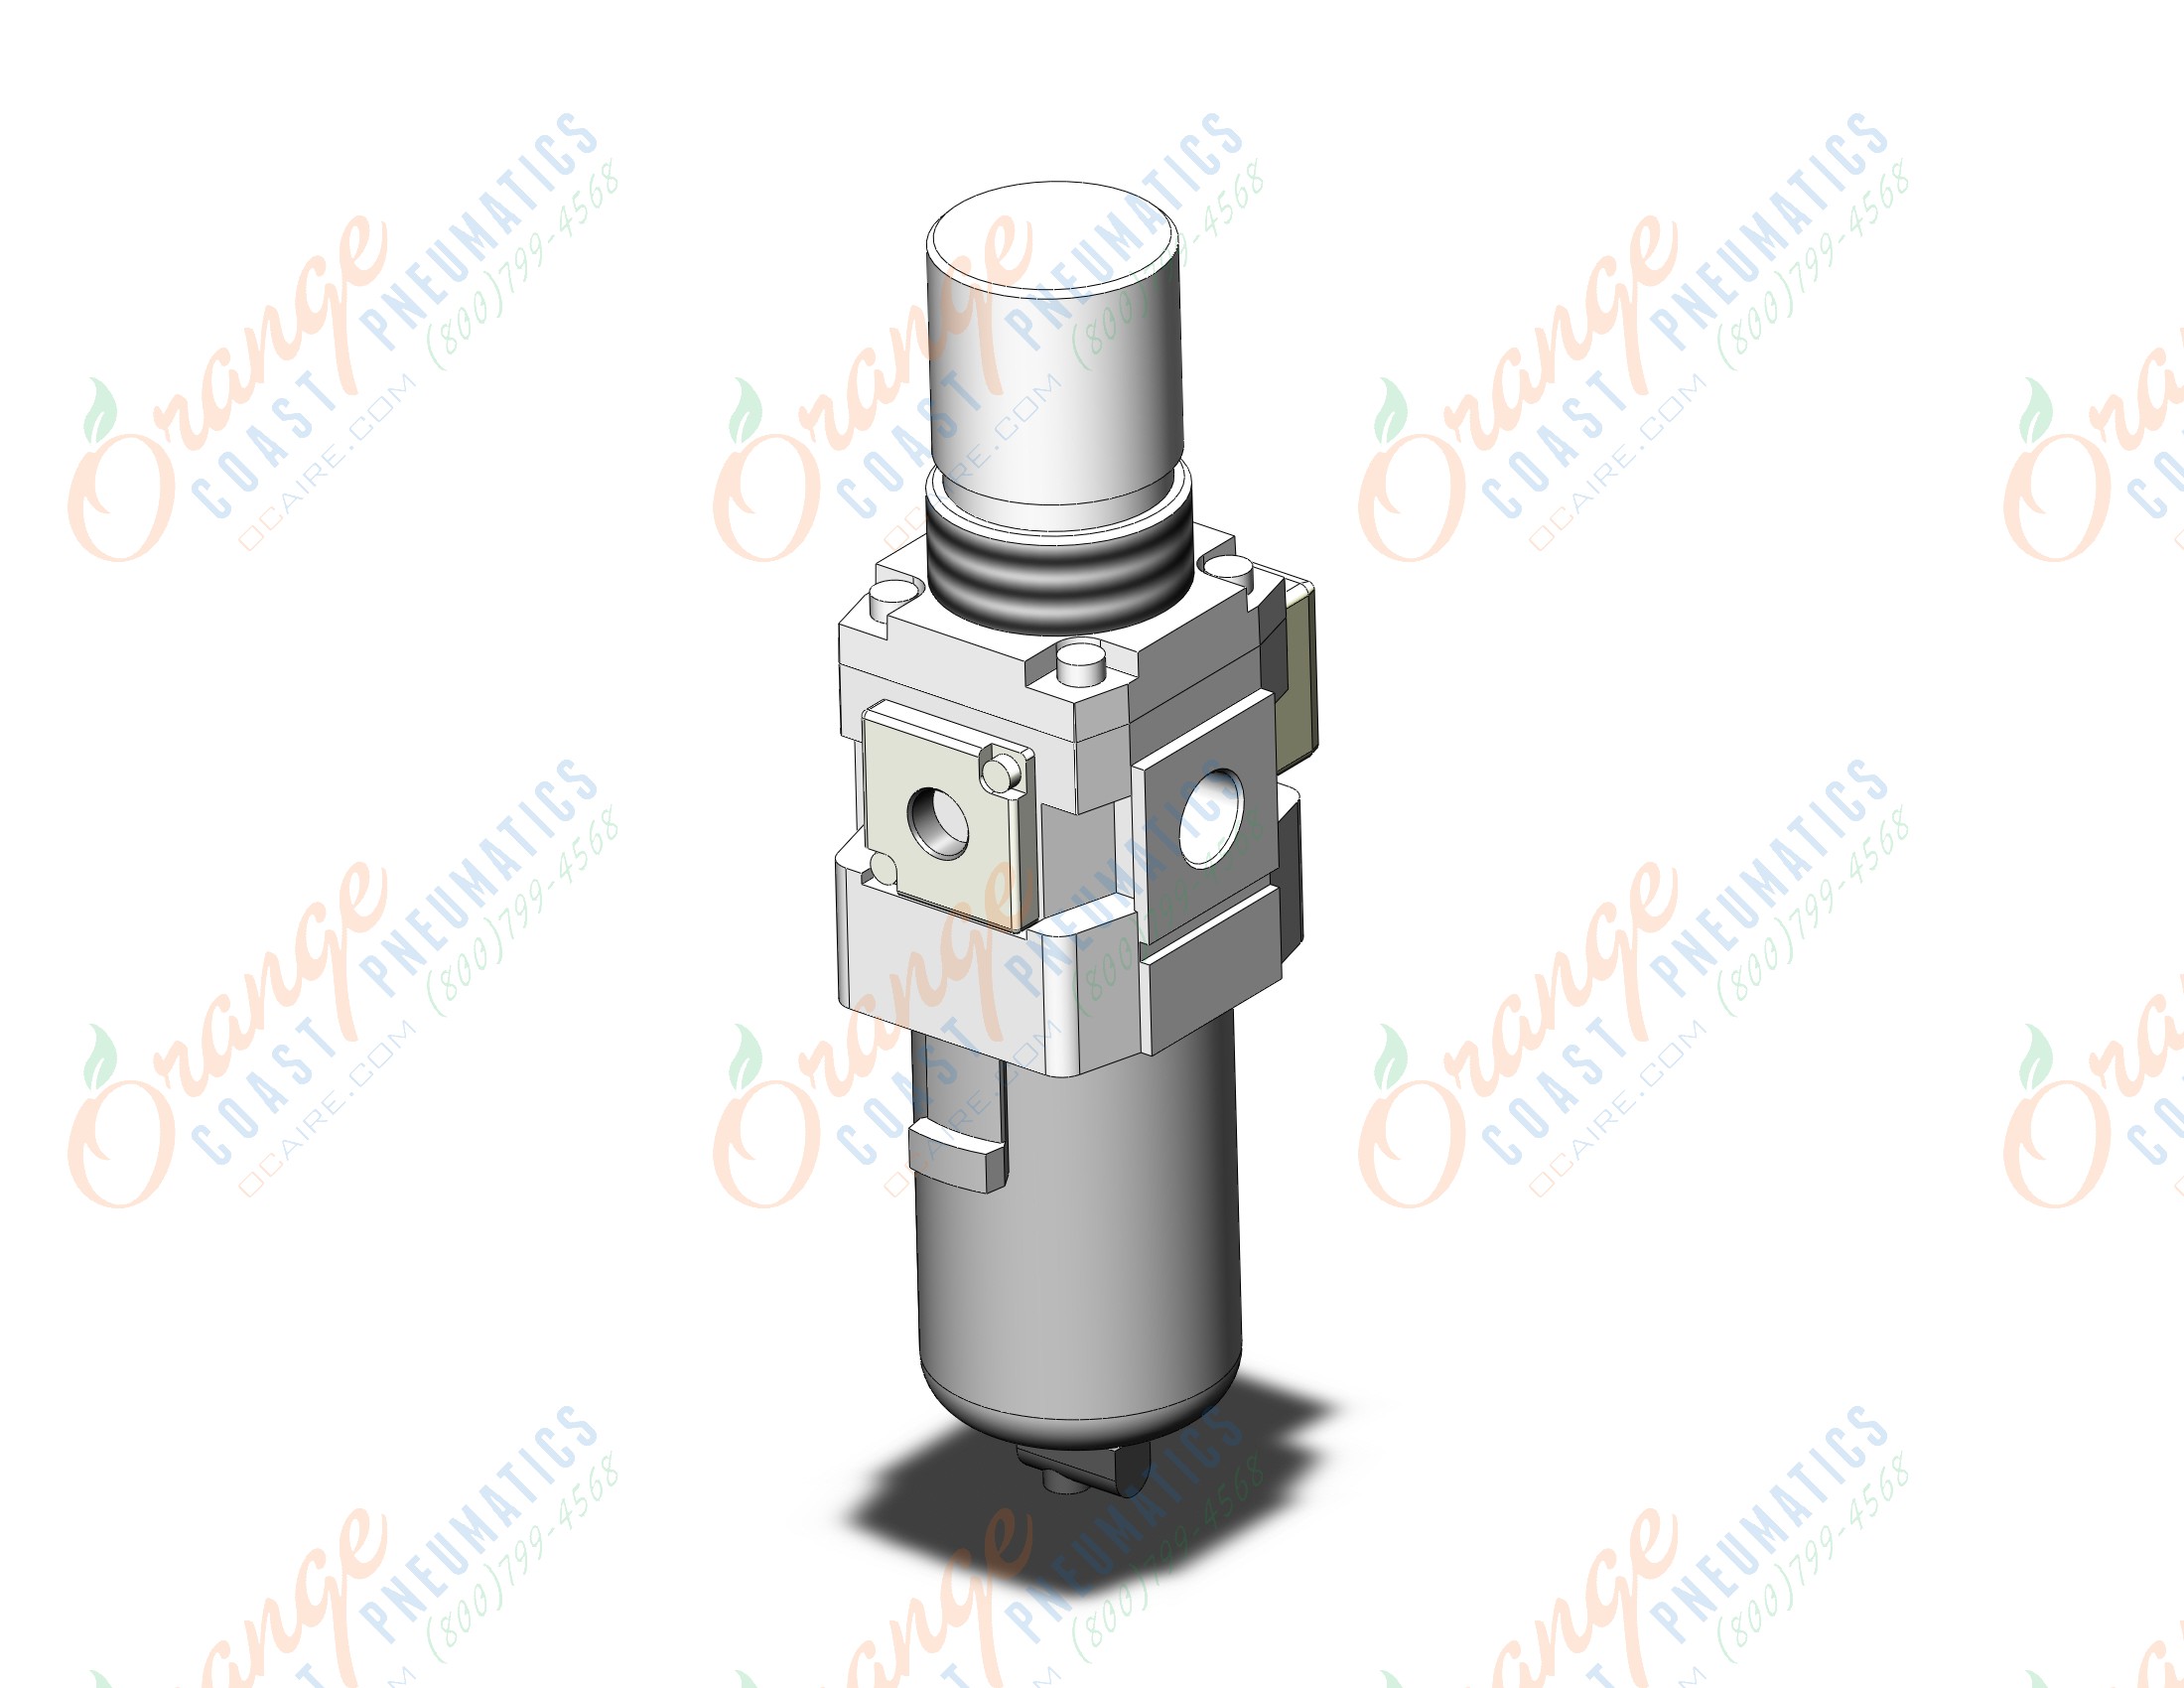 SMC AW30-N02E3-RZ-B filter/regulator, FILTER/REGULATOR, MODULAR F.R.L.